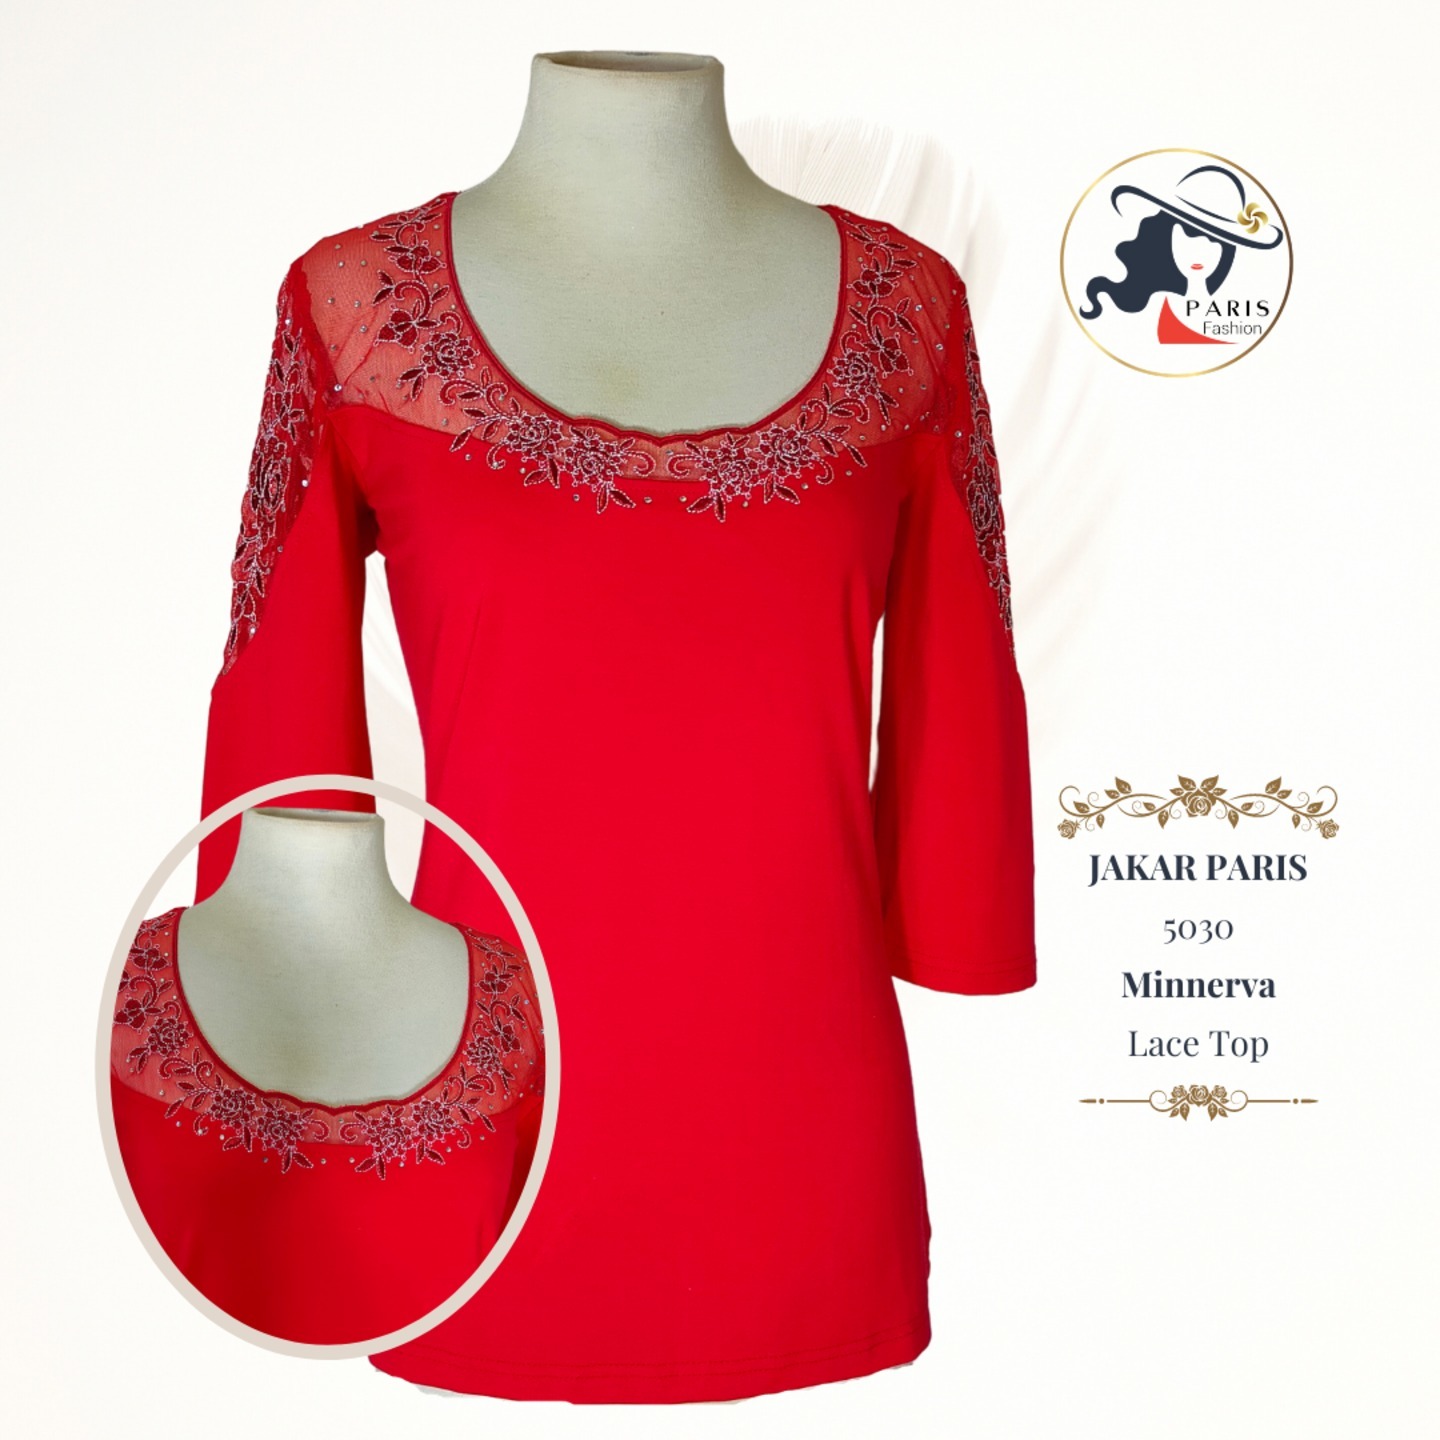 JAKAR PARIS  5030  Minnerva  Ruby Red Lace Top